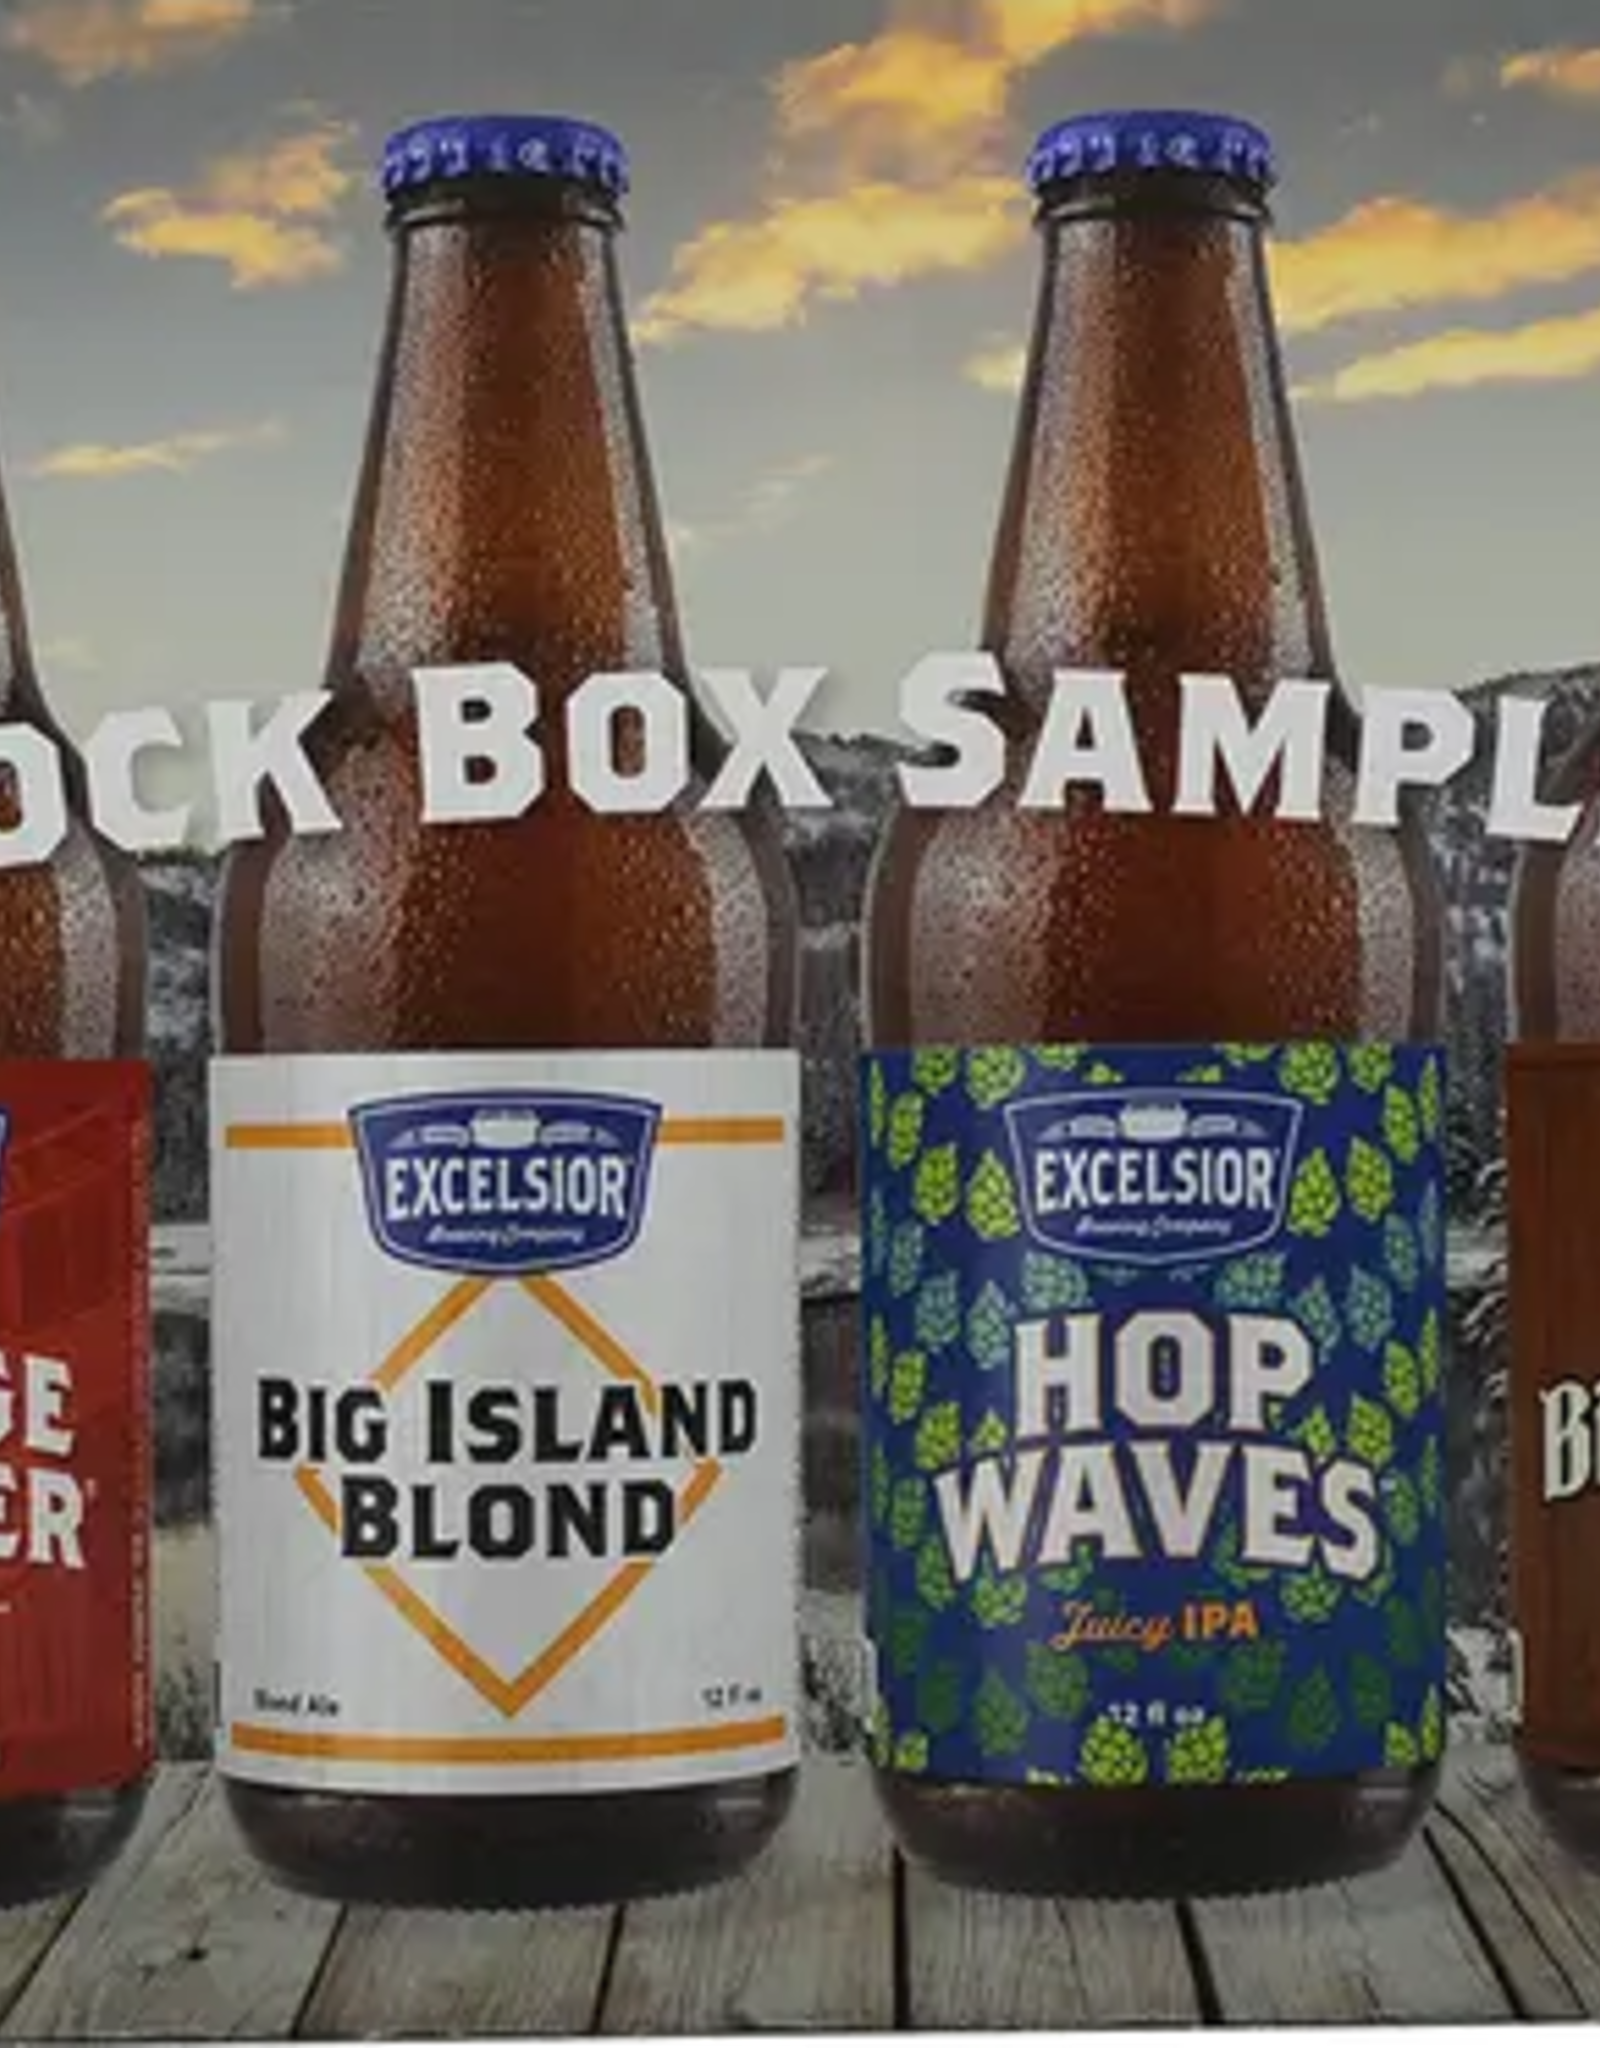 Excelsior Dock Box Sampler Pack 12x12 oz bottles